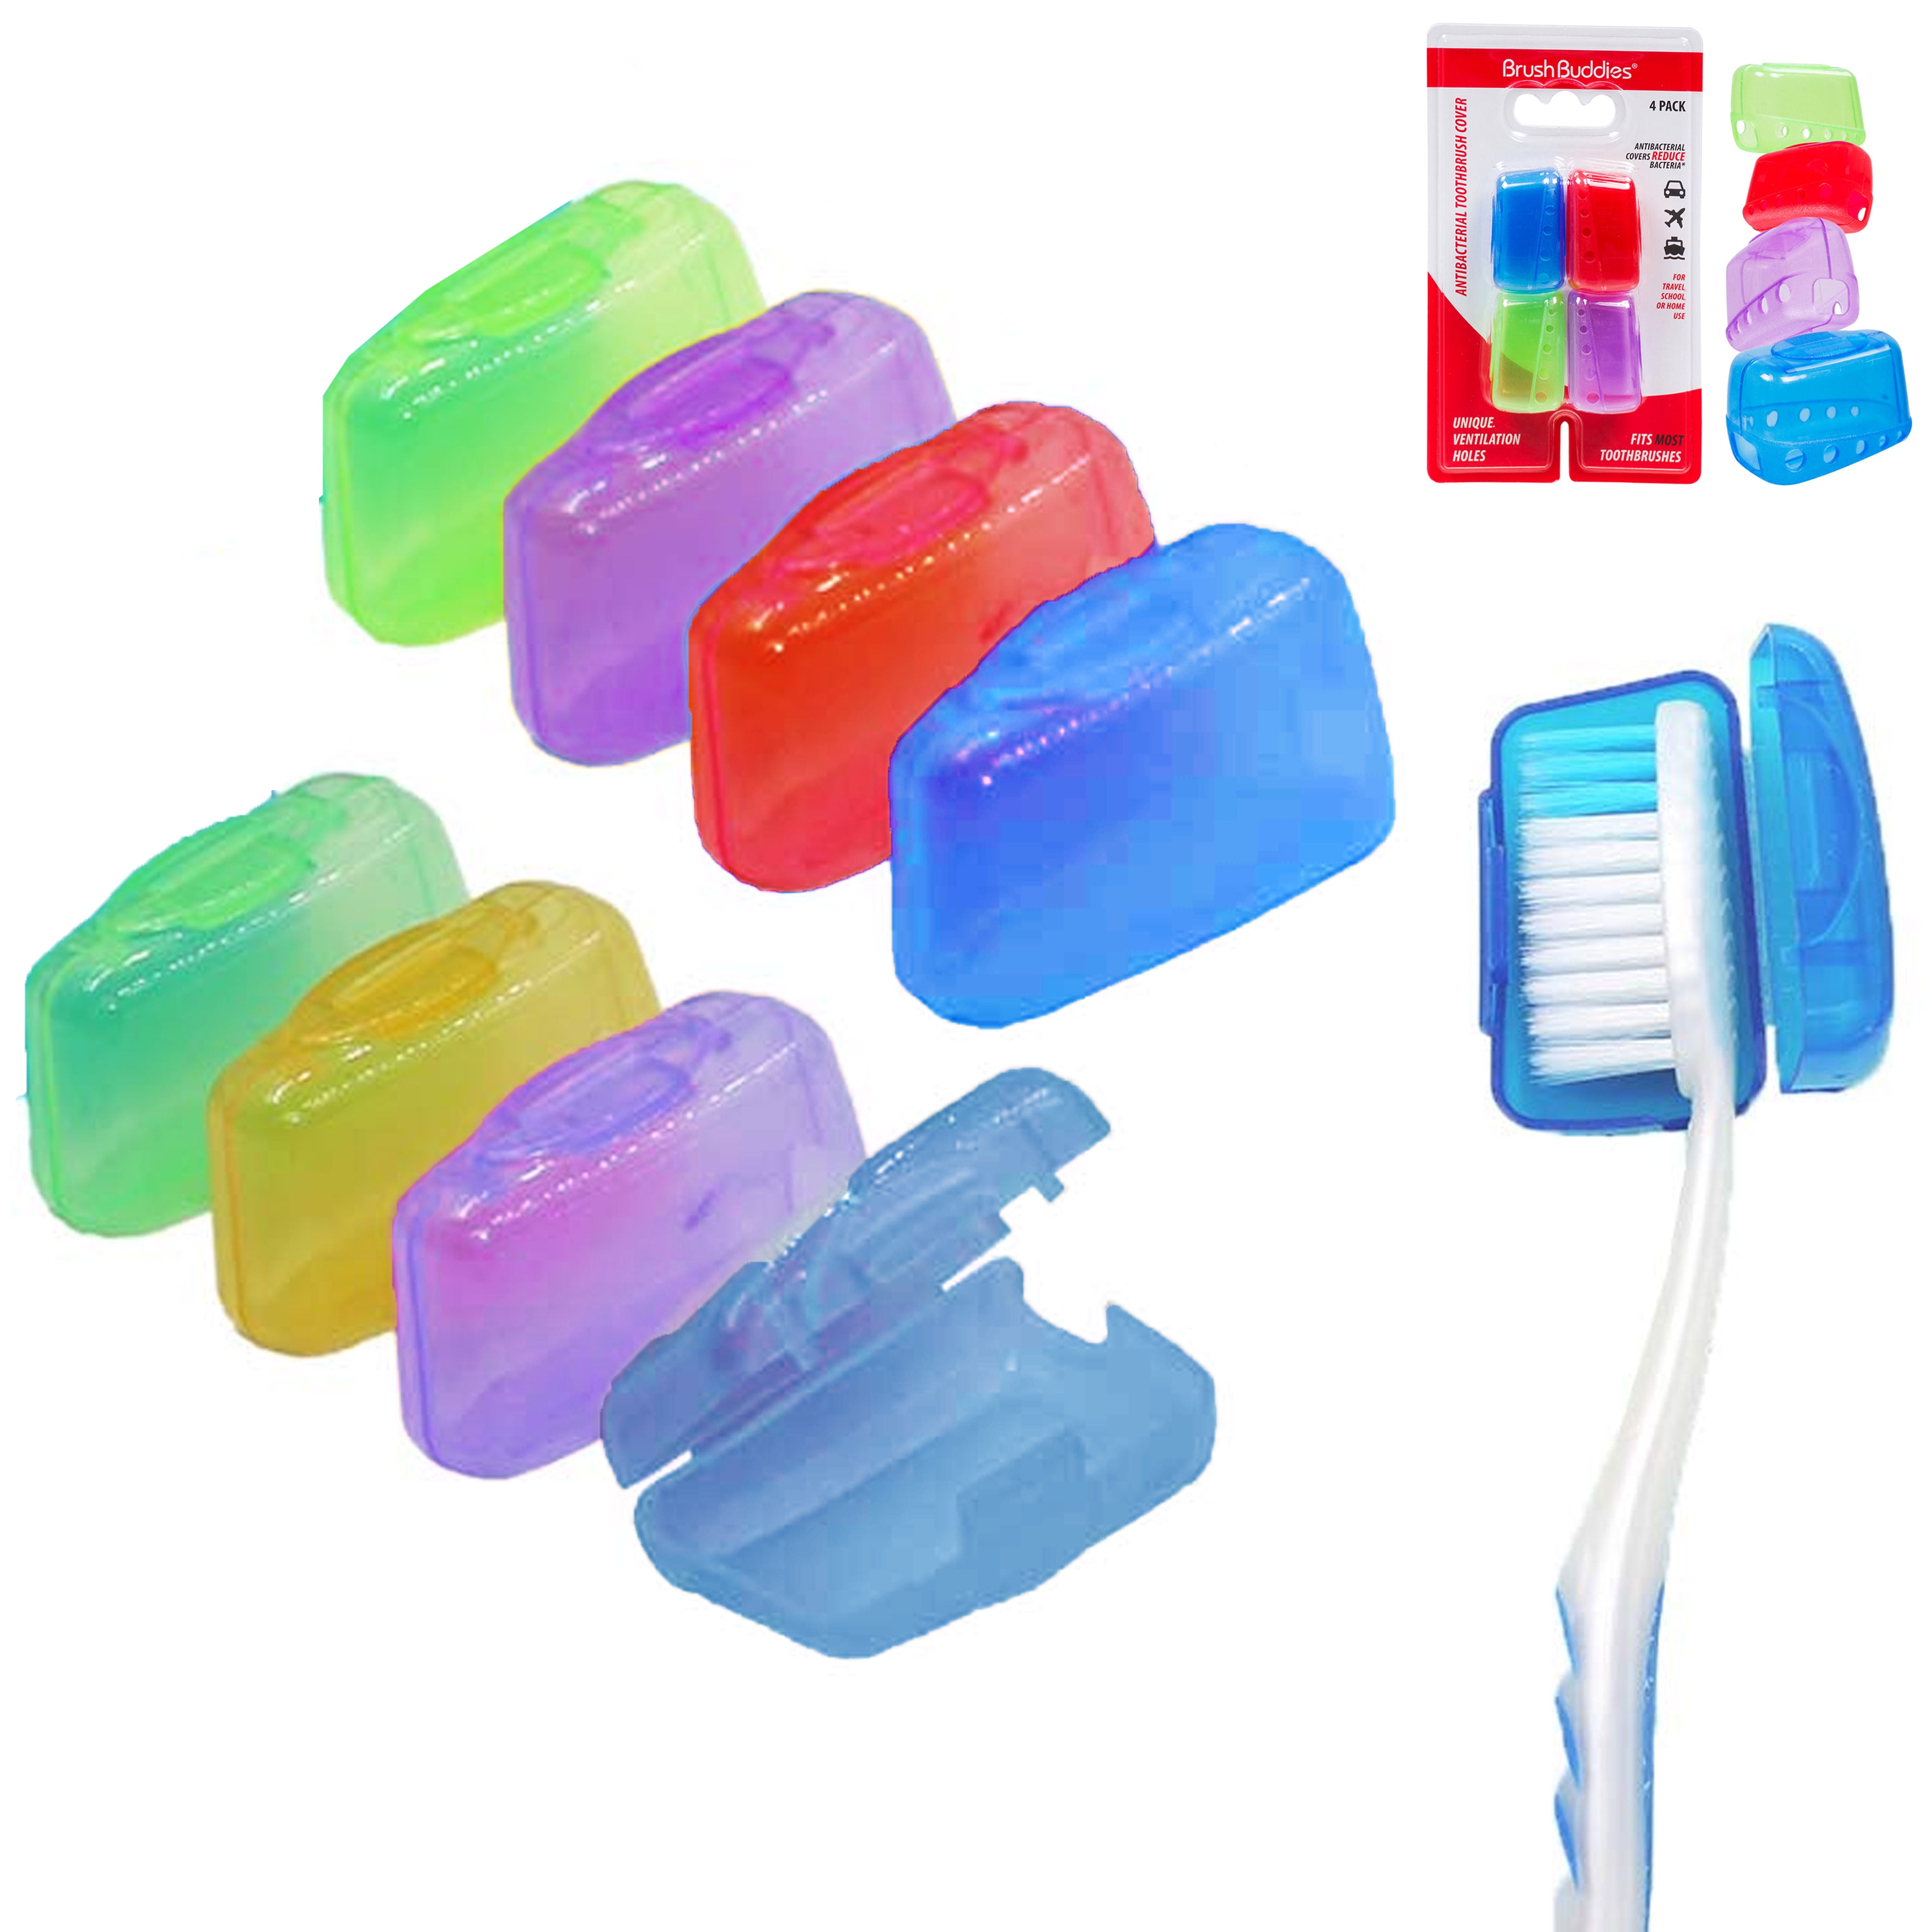 Brushes Holidays Family Pack 4 x Toothbrush Case Travel Cover ~ Plastic Holder 